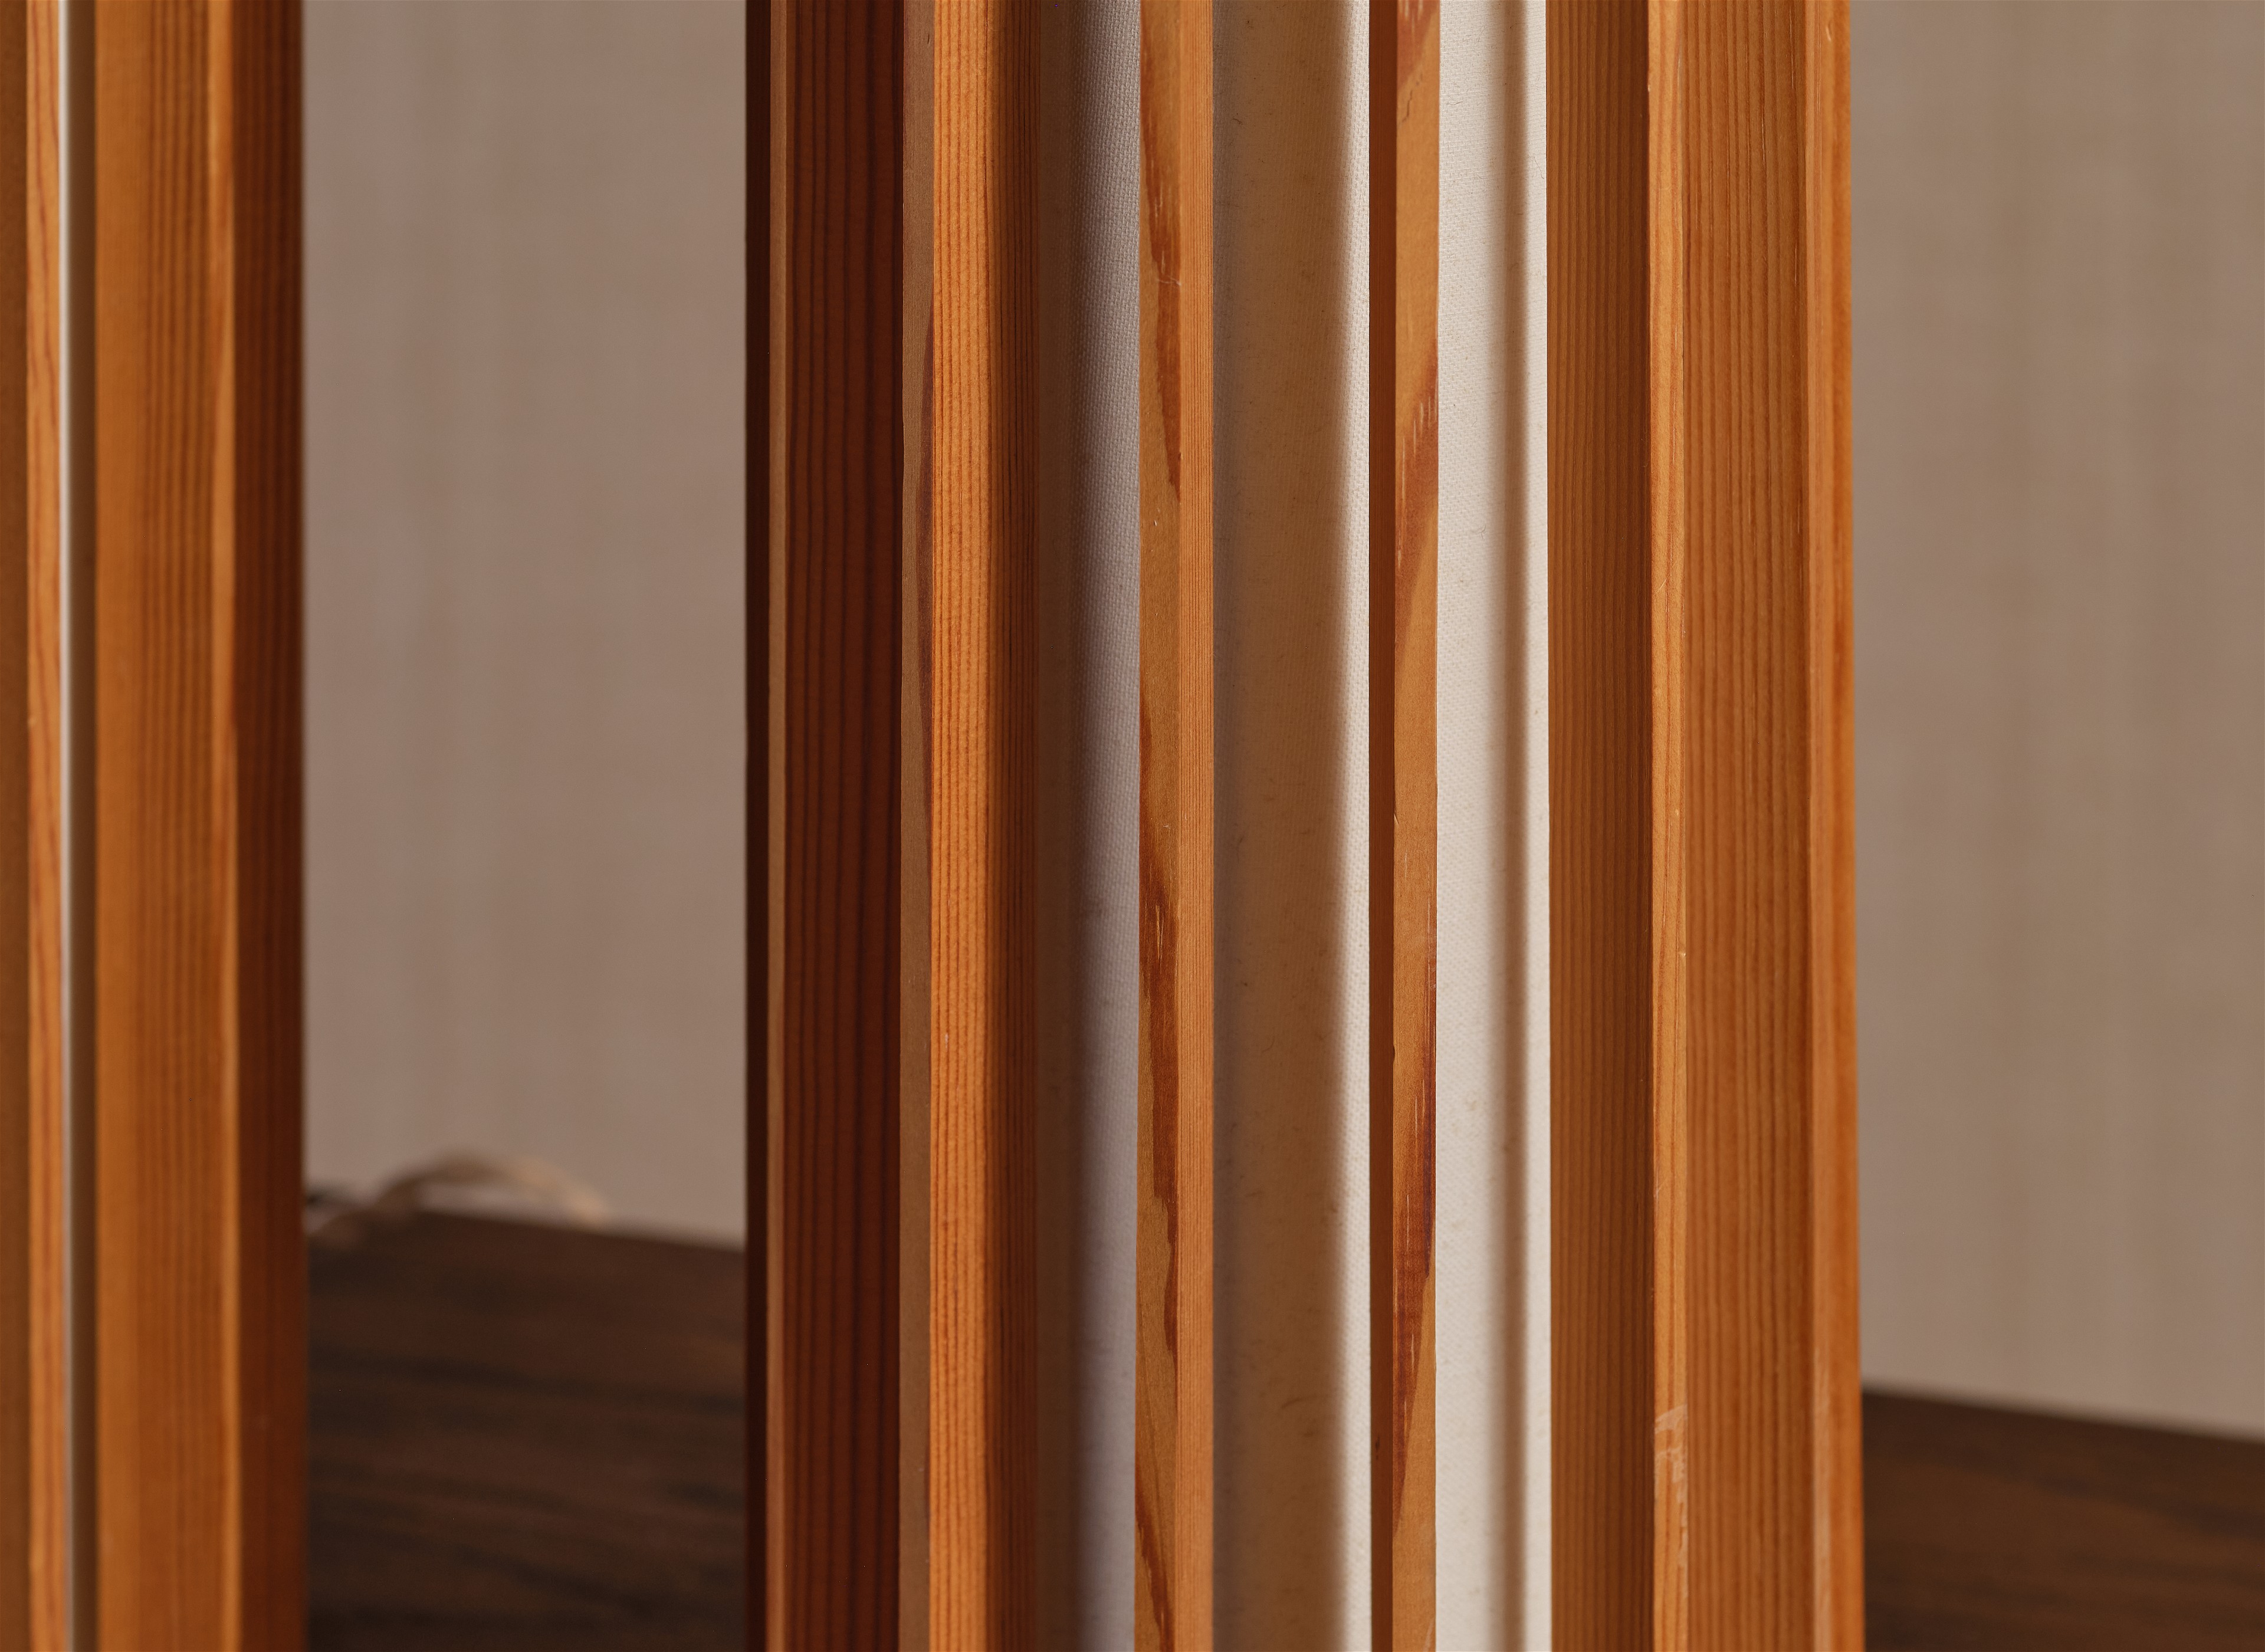 a close up of a wooden door frame